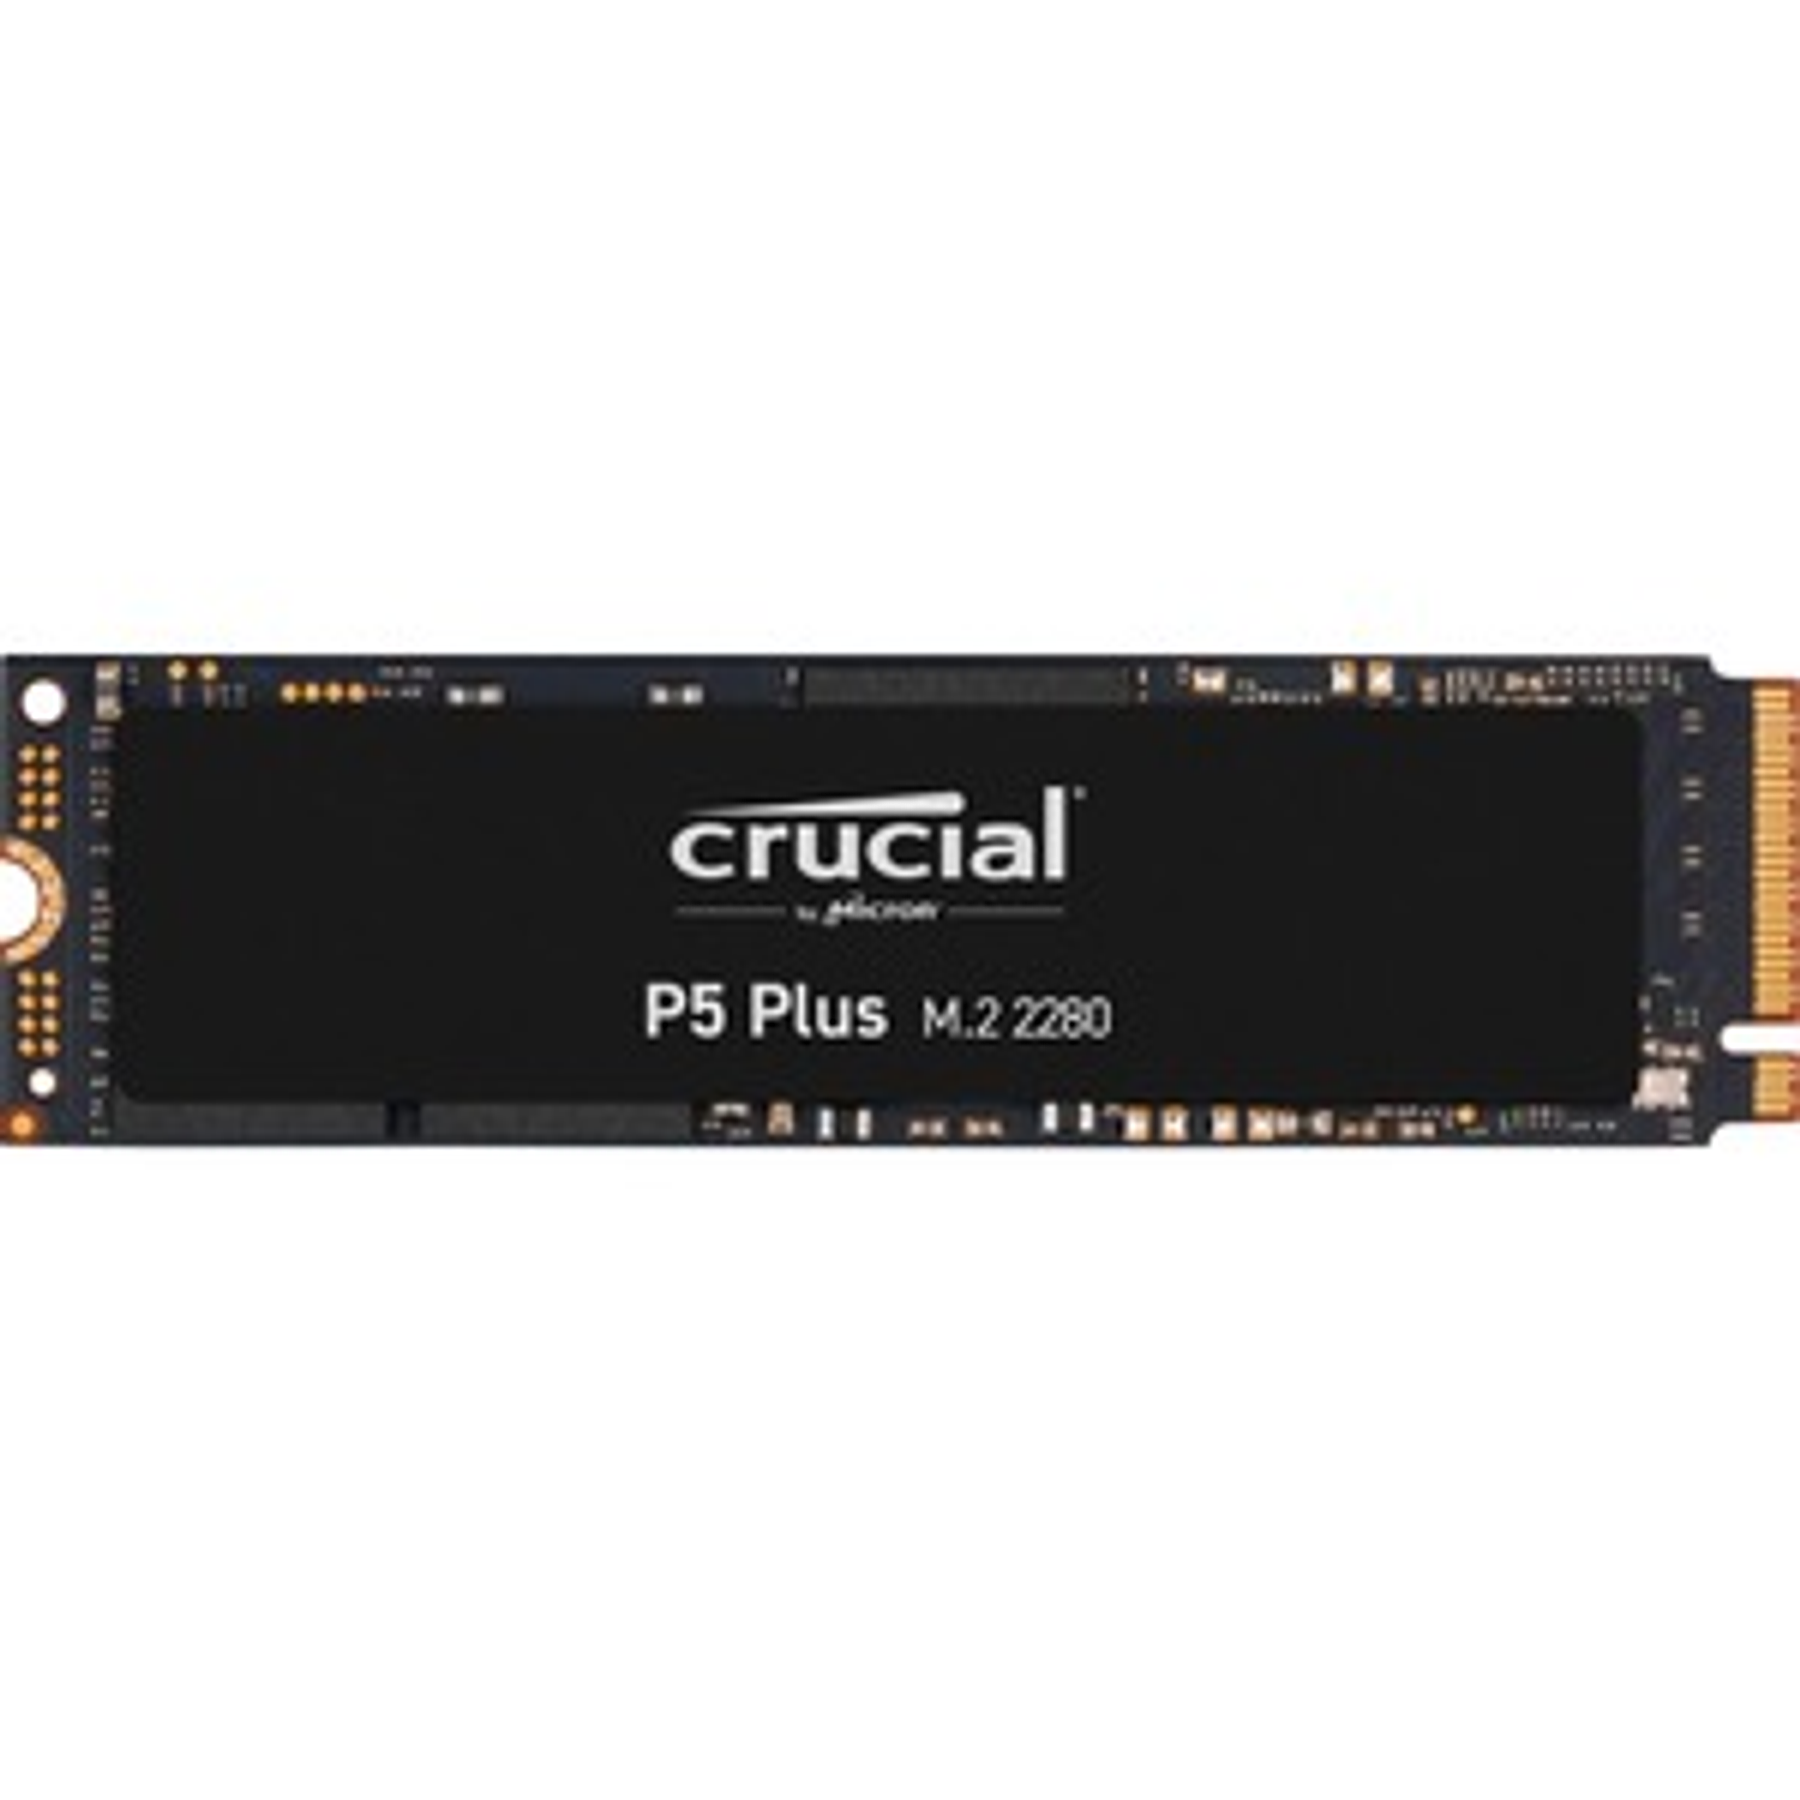 Crucial P3 Plus SSD 3D NAND NVMe PCIe M.2 SSD 500 GB